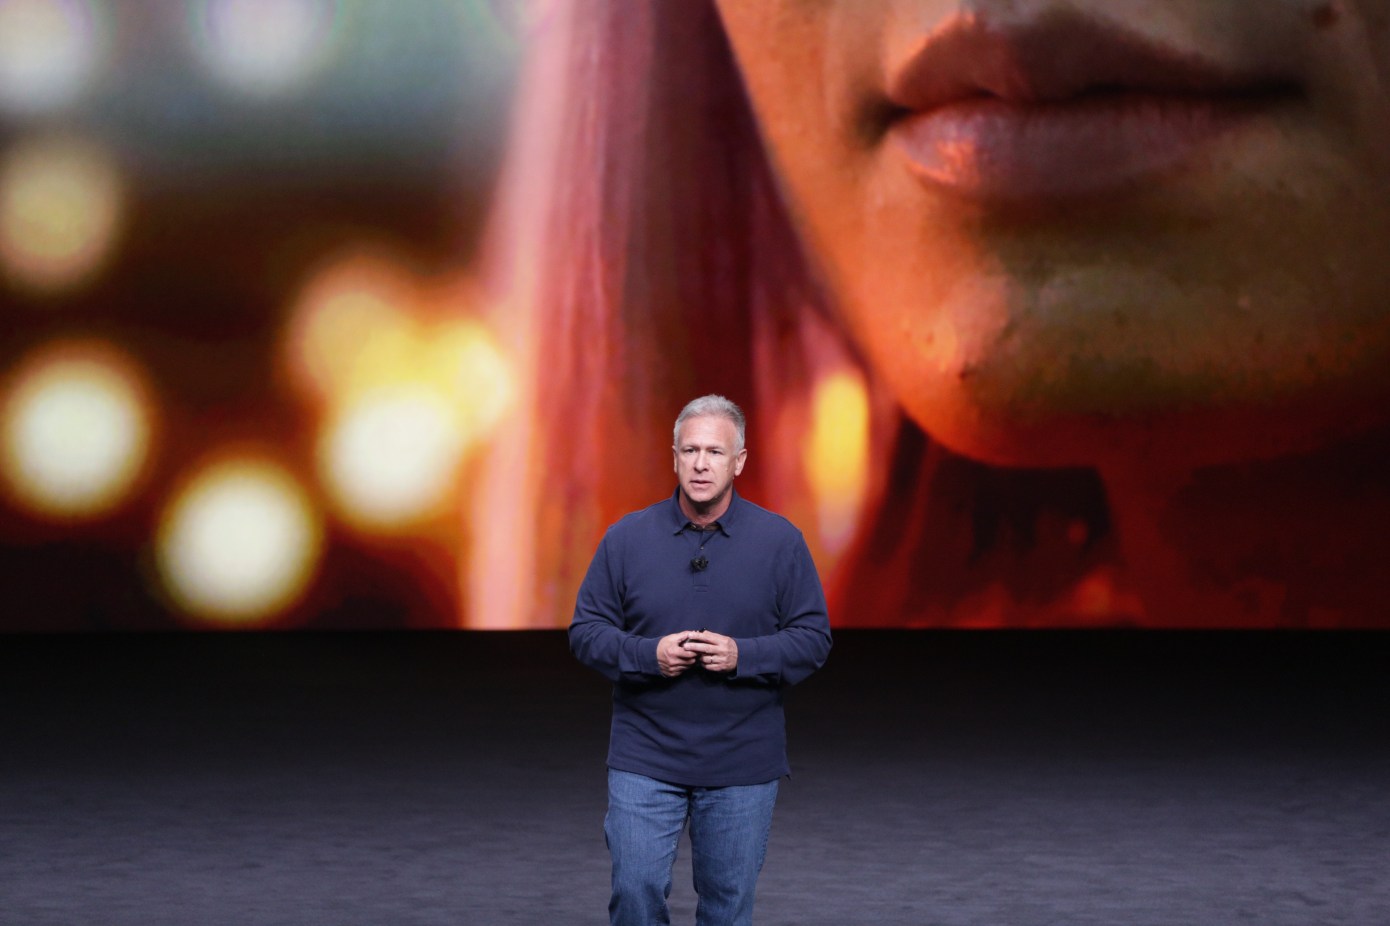 Apple’s veteran marketing chief Phil Schiller moves to smaller role inside company